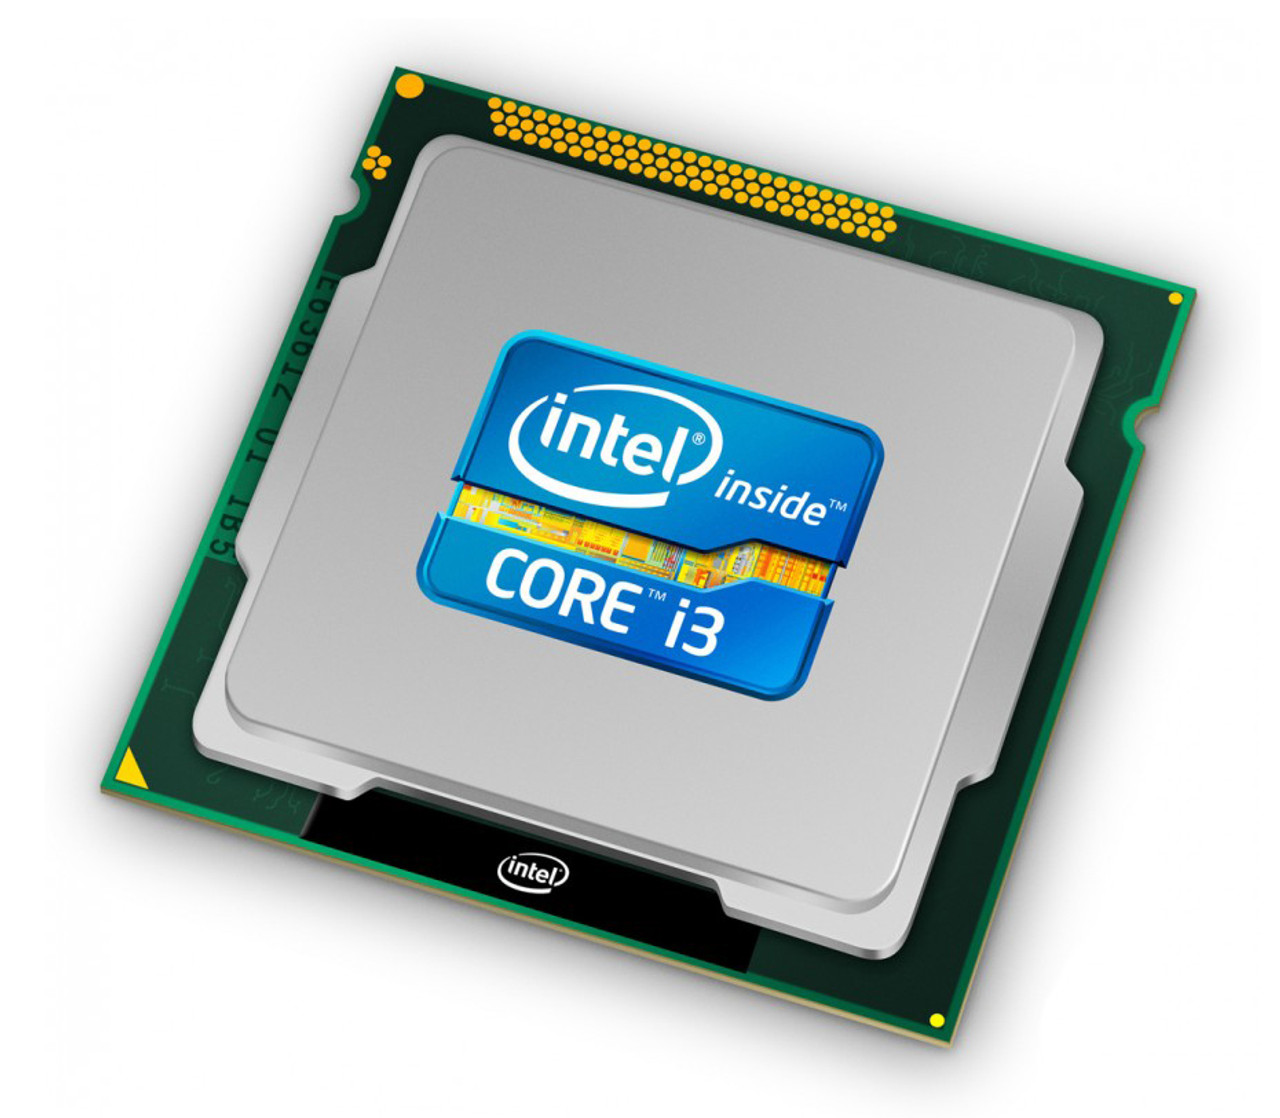 SR1EK Intel Core i3-4005U Dual Core 1.70GHz 5.00GT/s DMI2 3MB L3 Cache Socket BGA1168 Mobile Processor